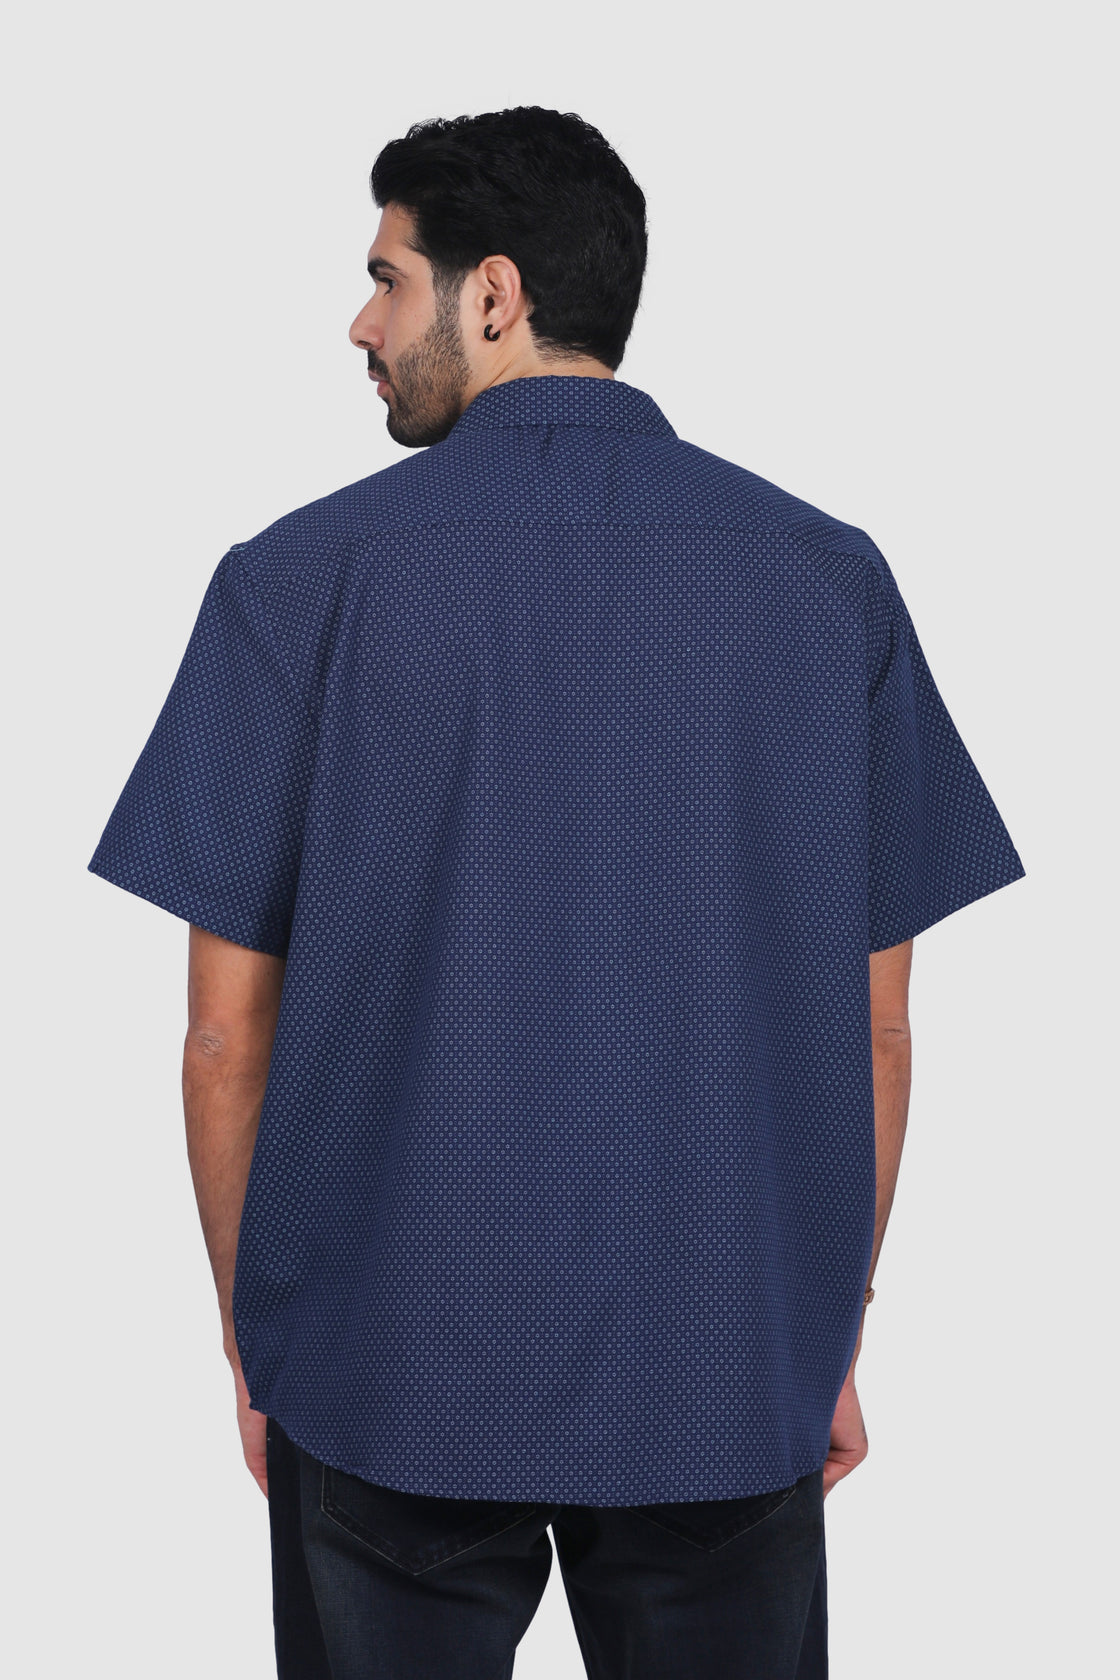 North 56°4 Small Pattern Shirt